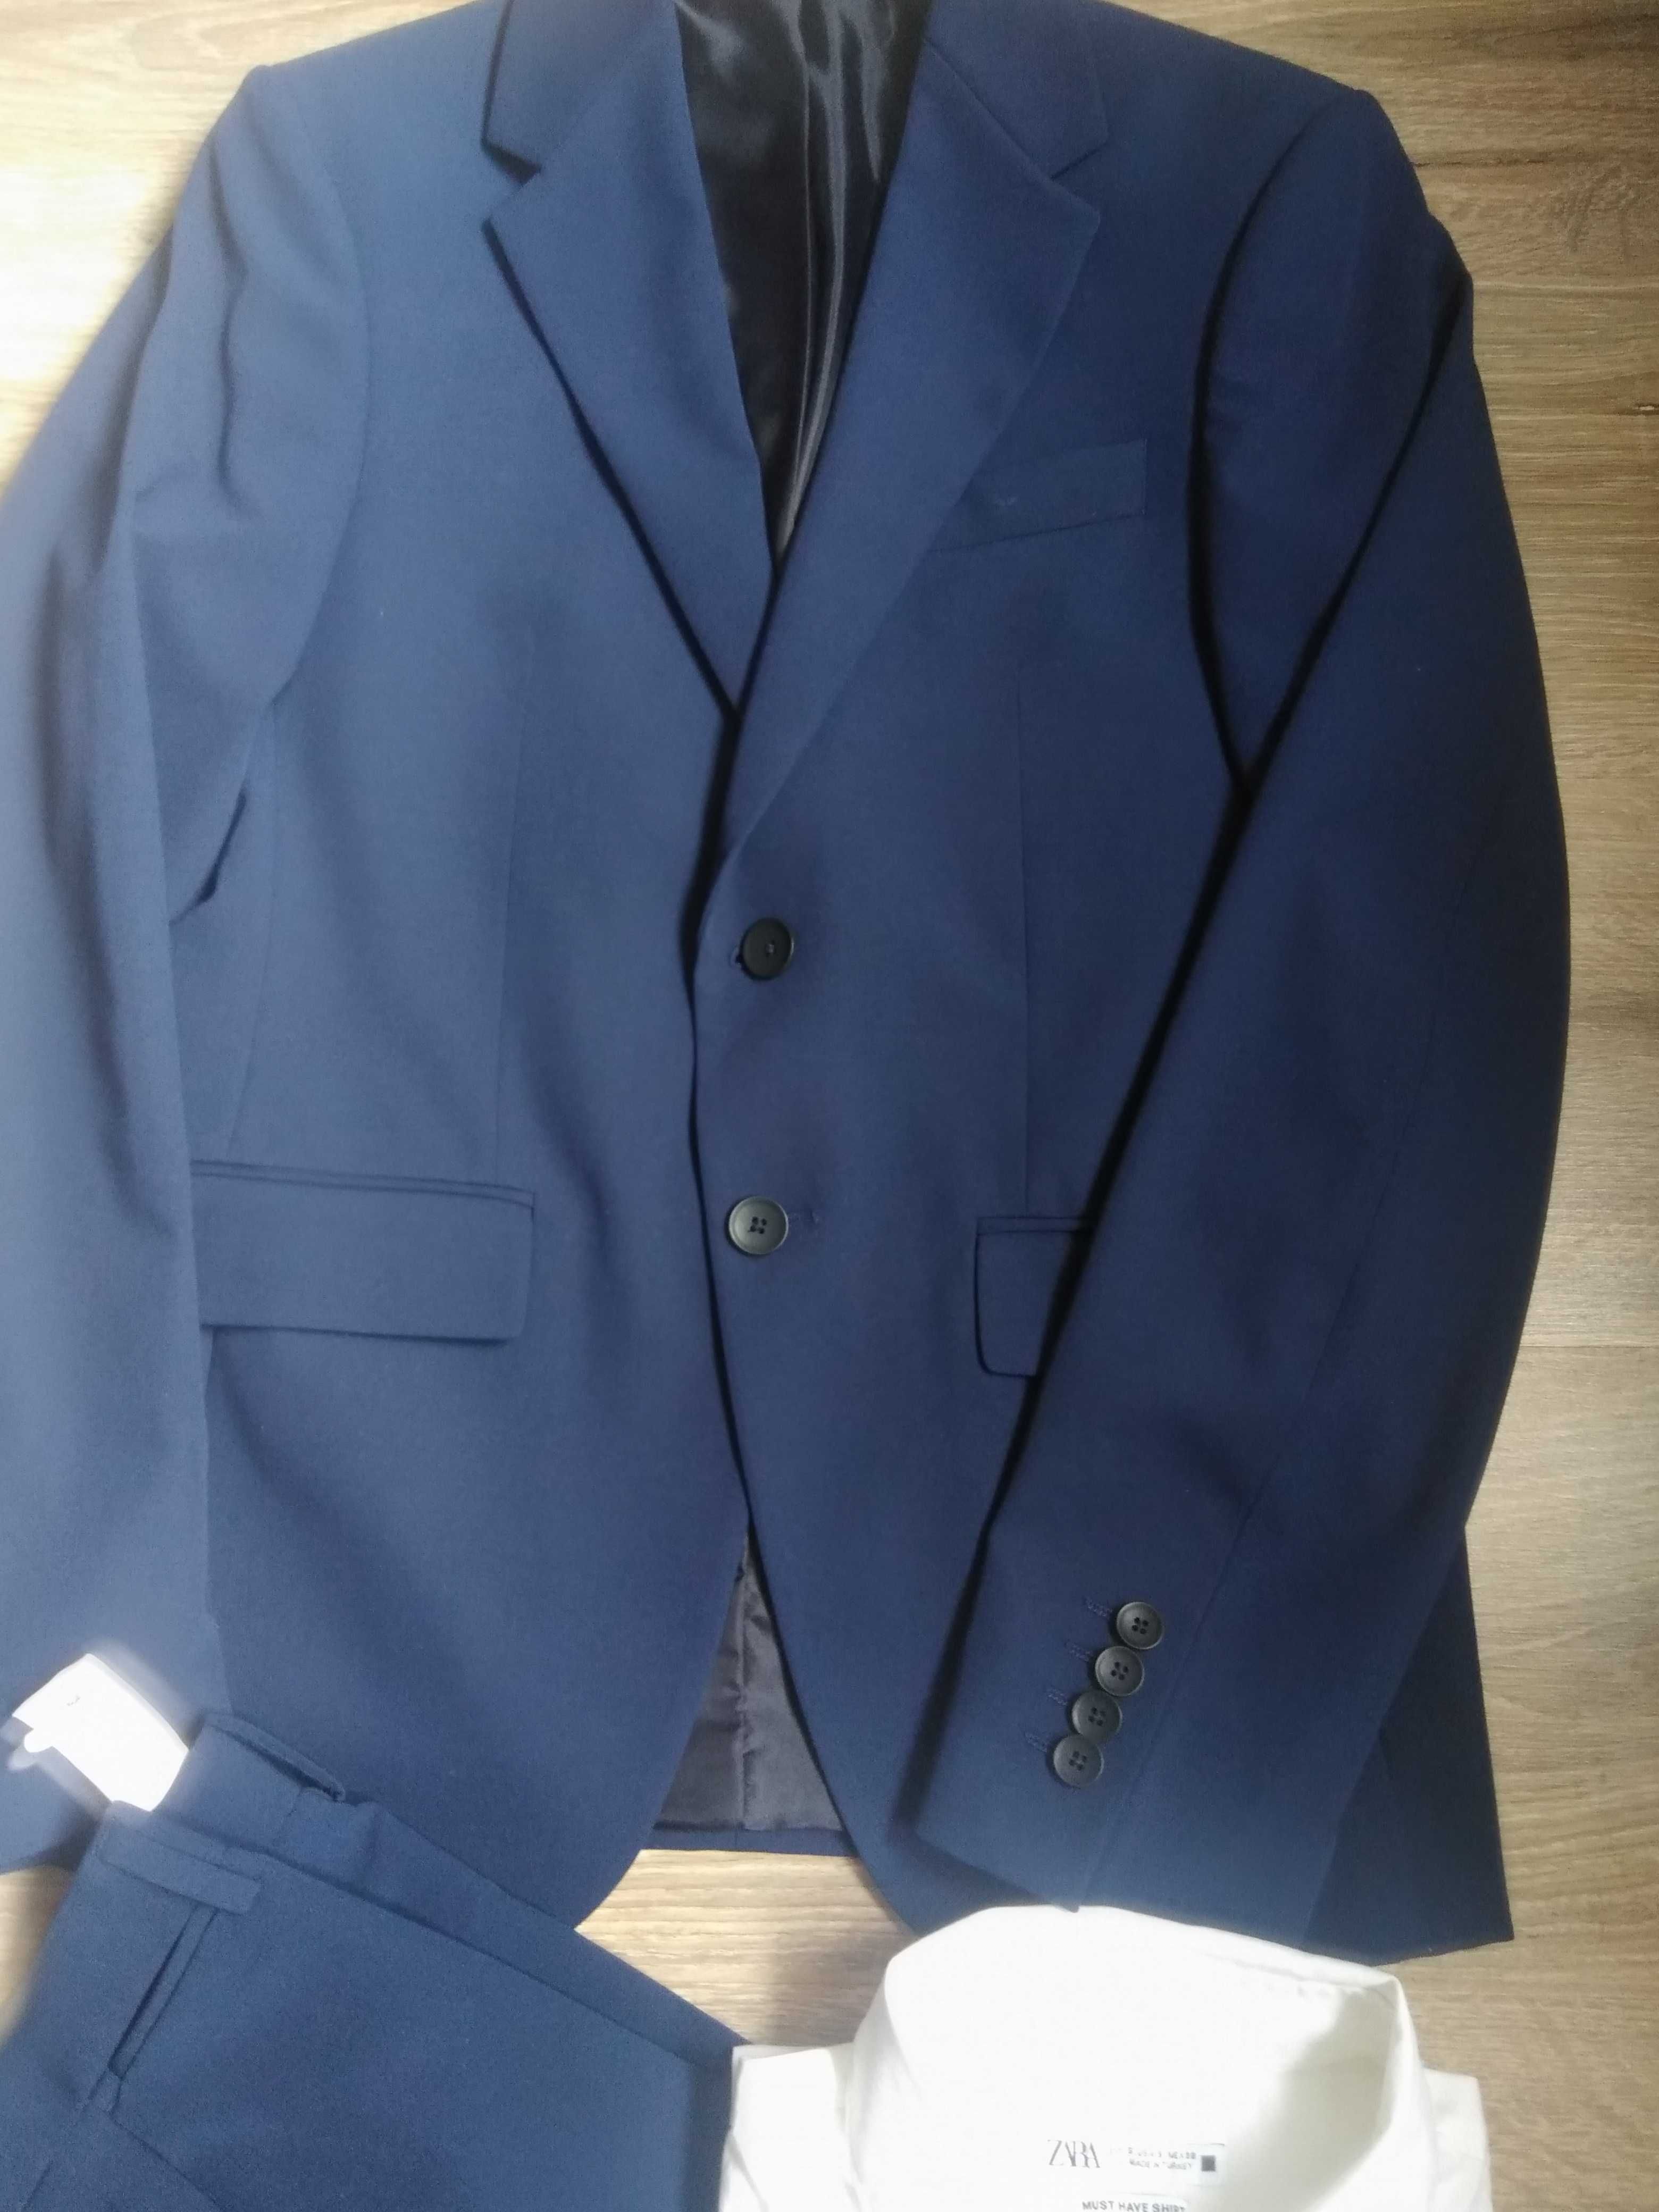 Garnitur Zara spodnie marynarka koszula 36 44 S slim fit granat